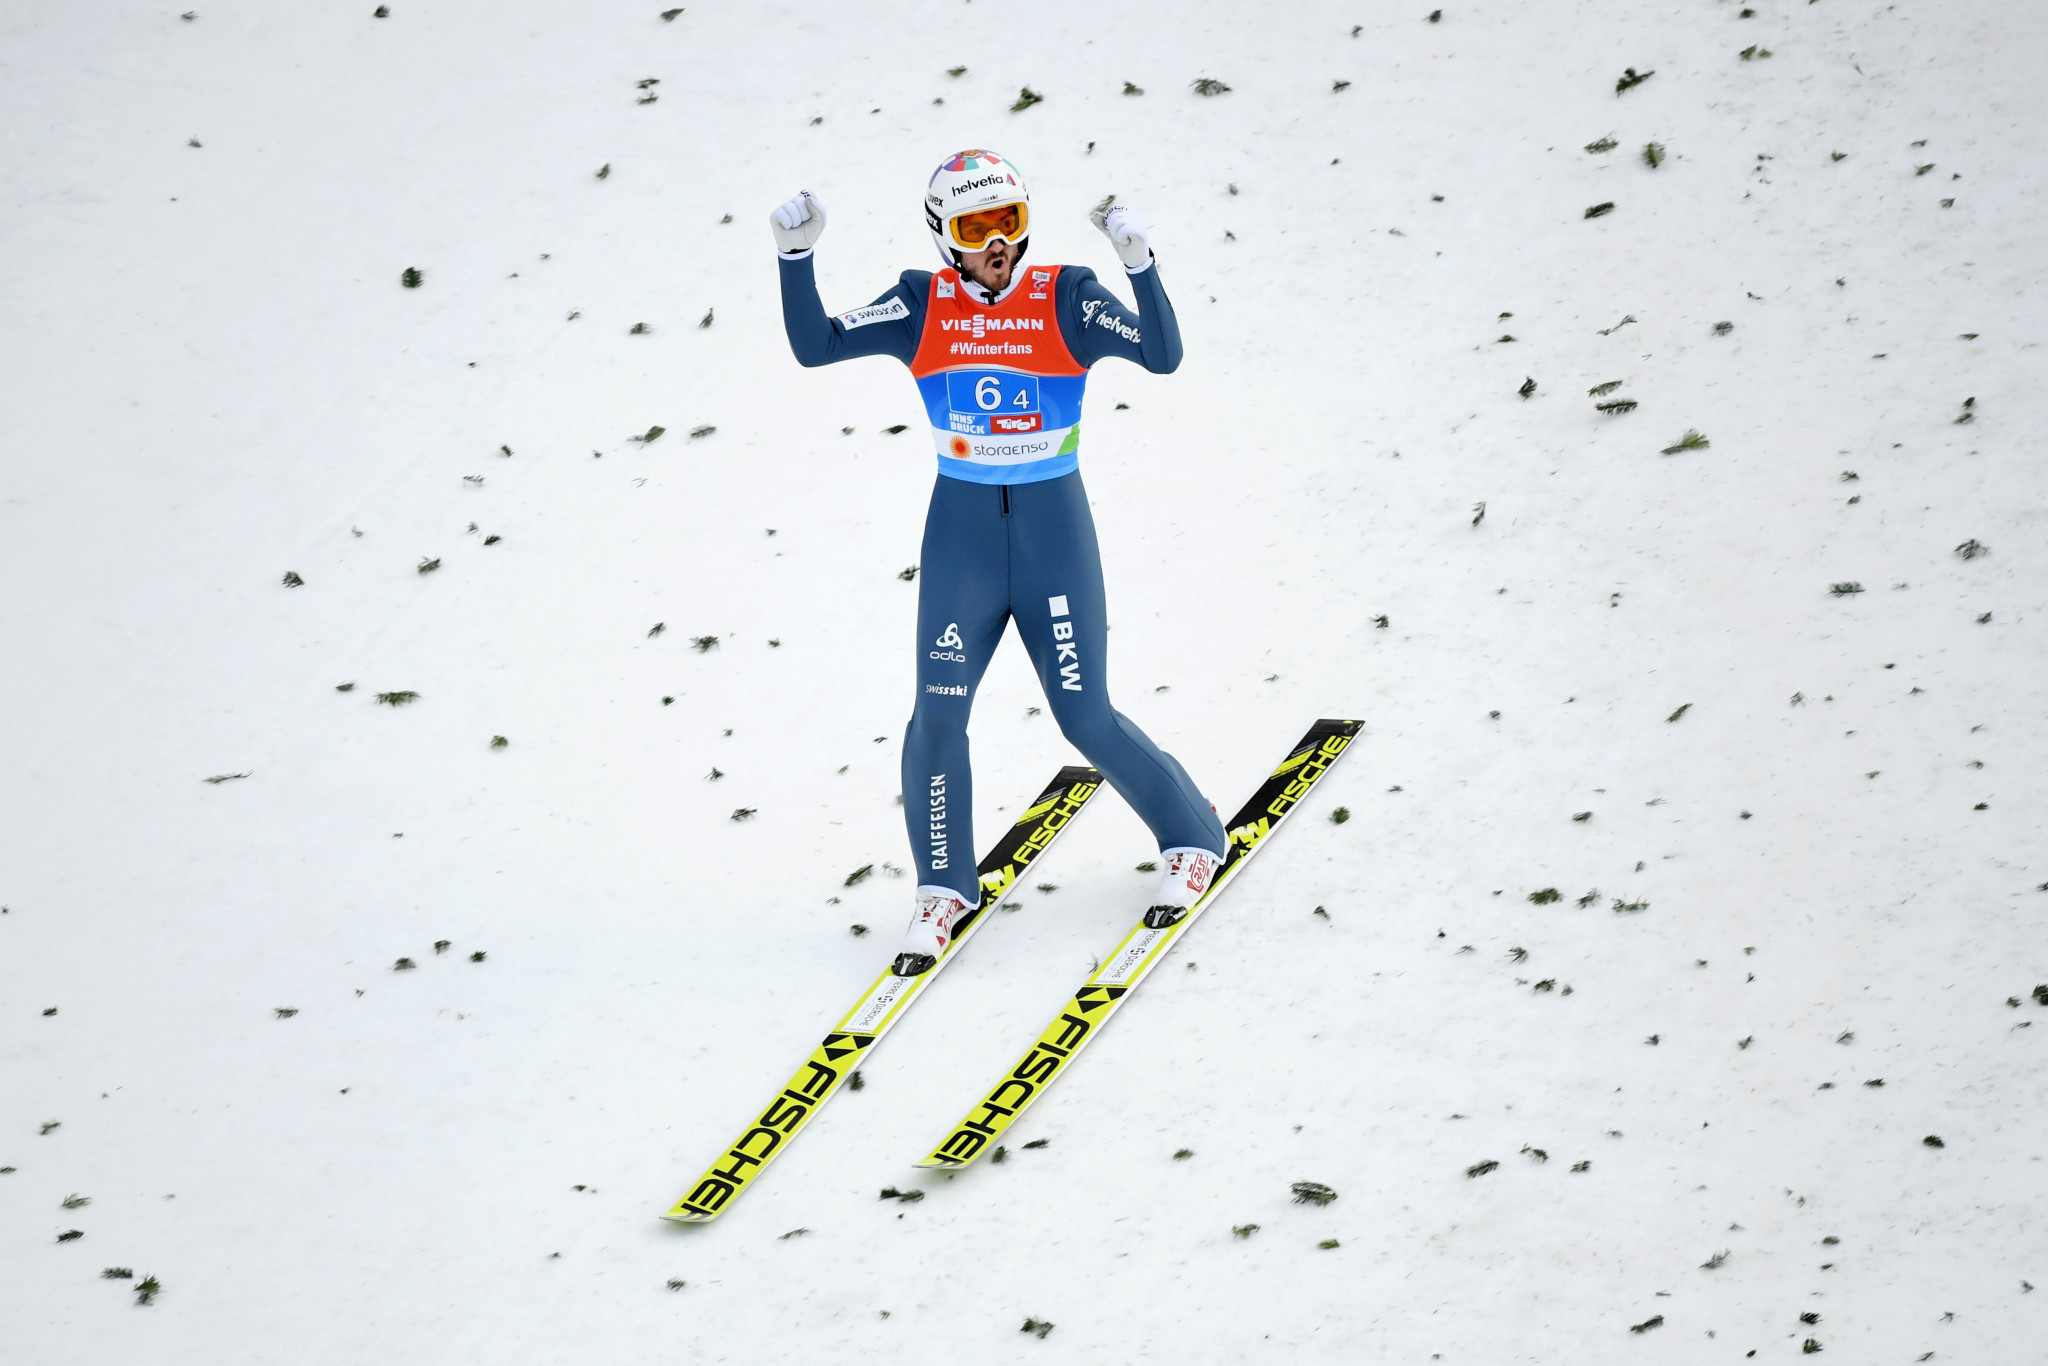 World Championships ski jumping bronze medallist Killian Peier of Switzerland has been unveiled as the latest Lausanne 2020 ambassador ©Getty Images